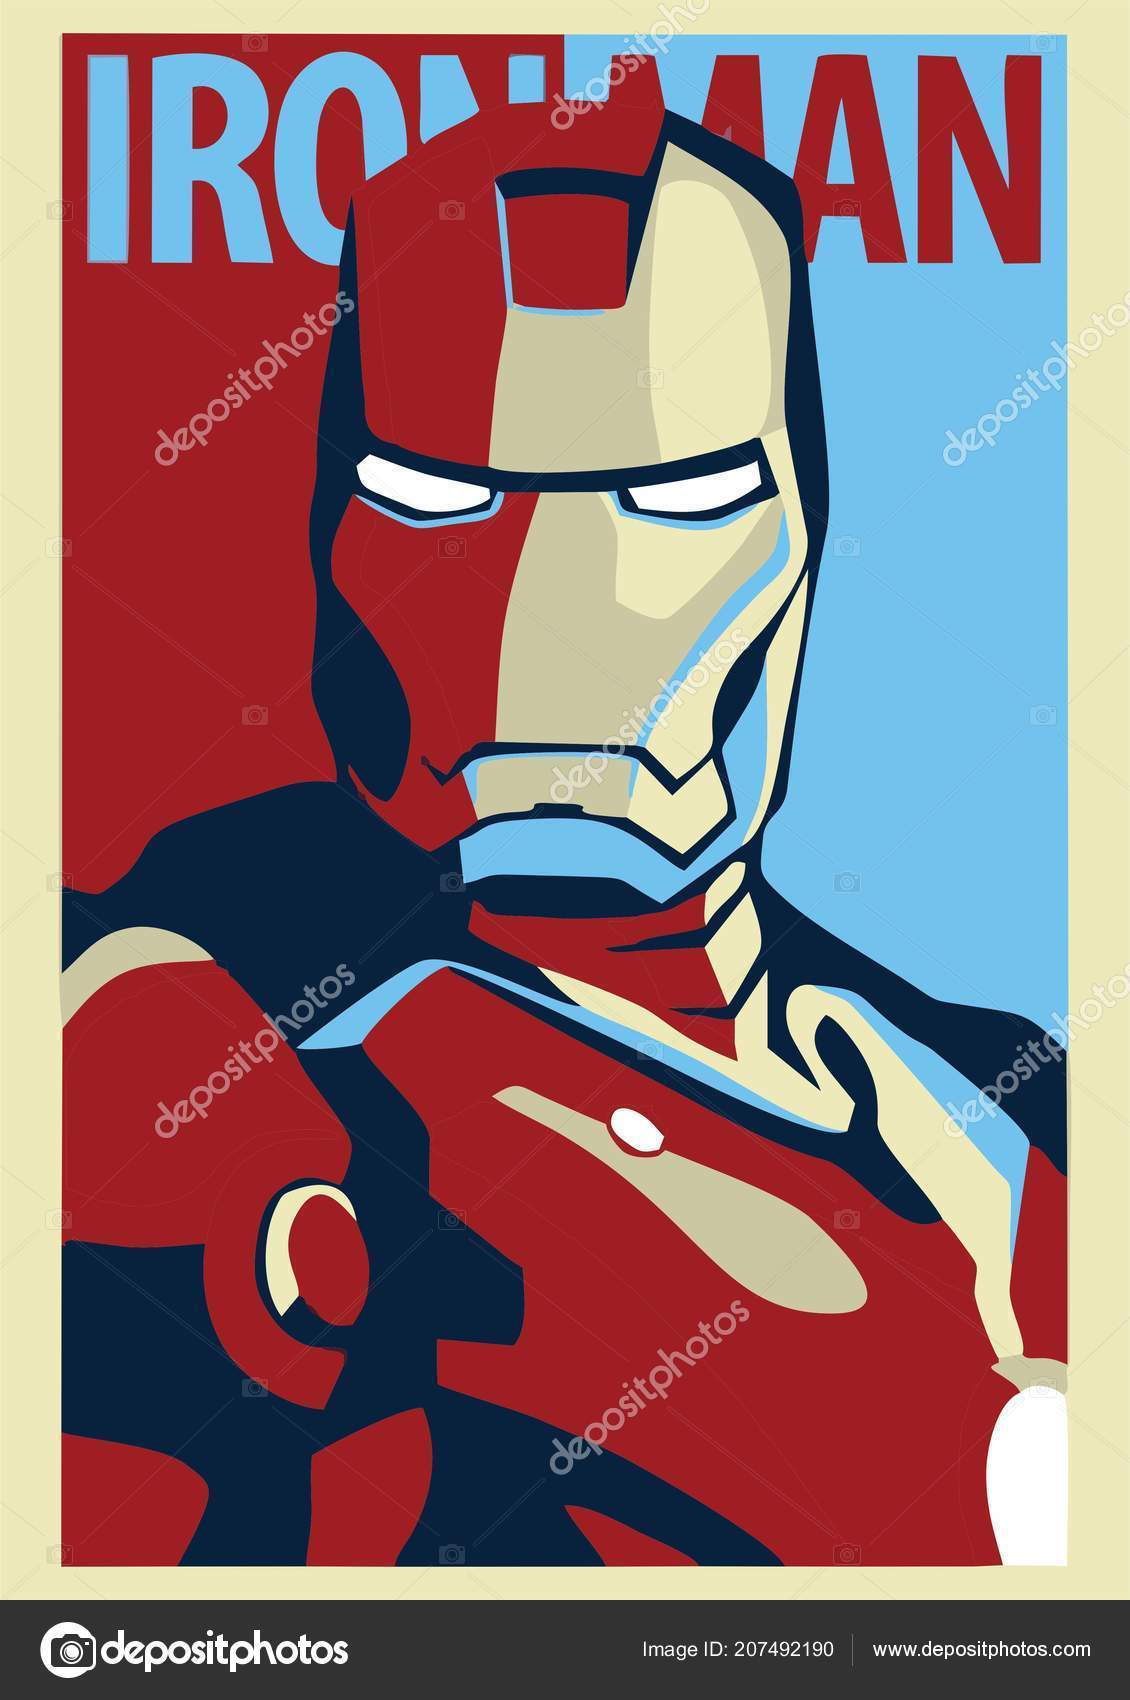 620 Koleksi Gambar Iron Man Vector Gratis Terbaik